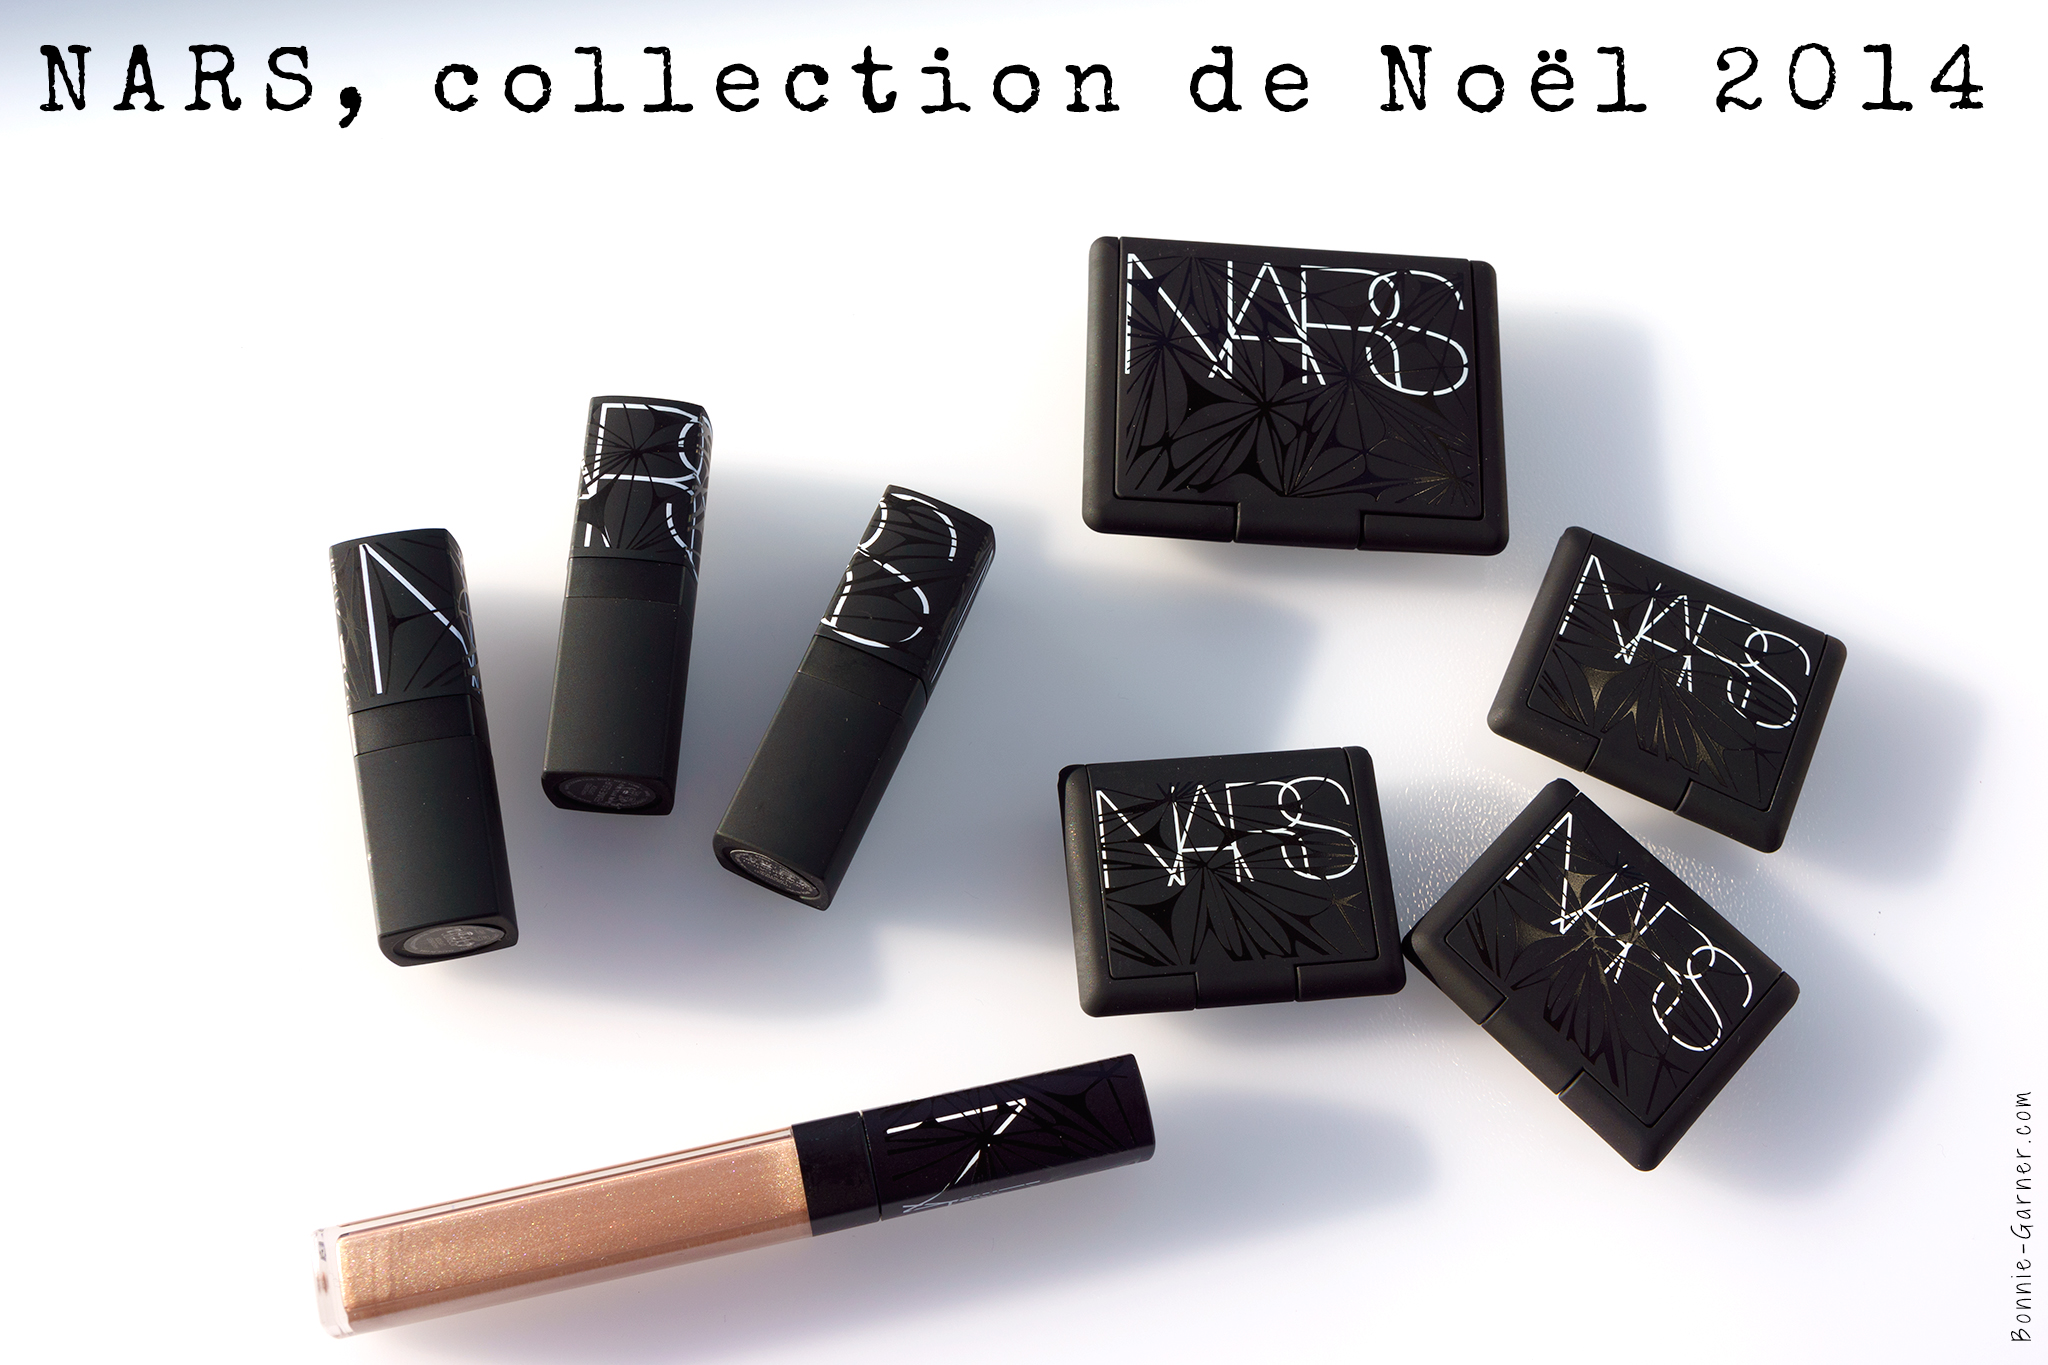 NARS collection de Noël 2014